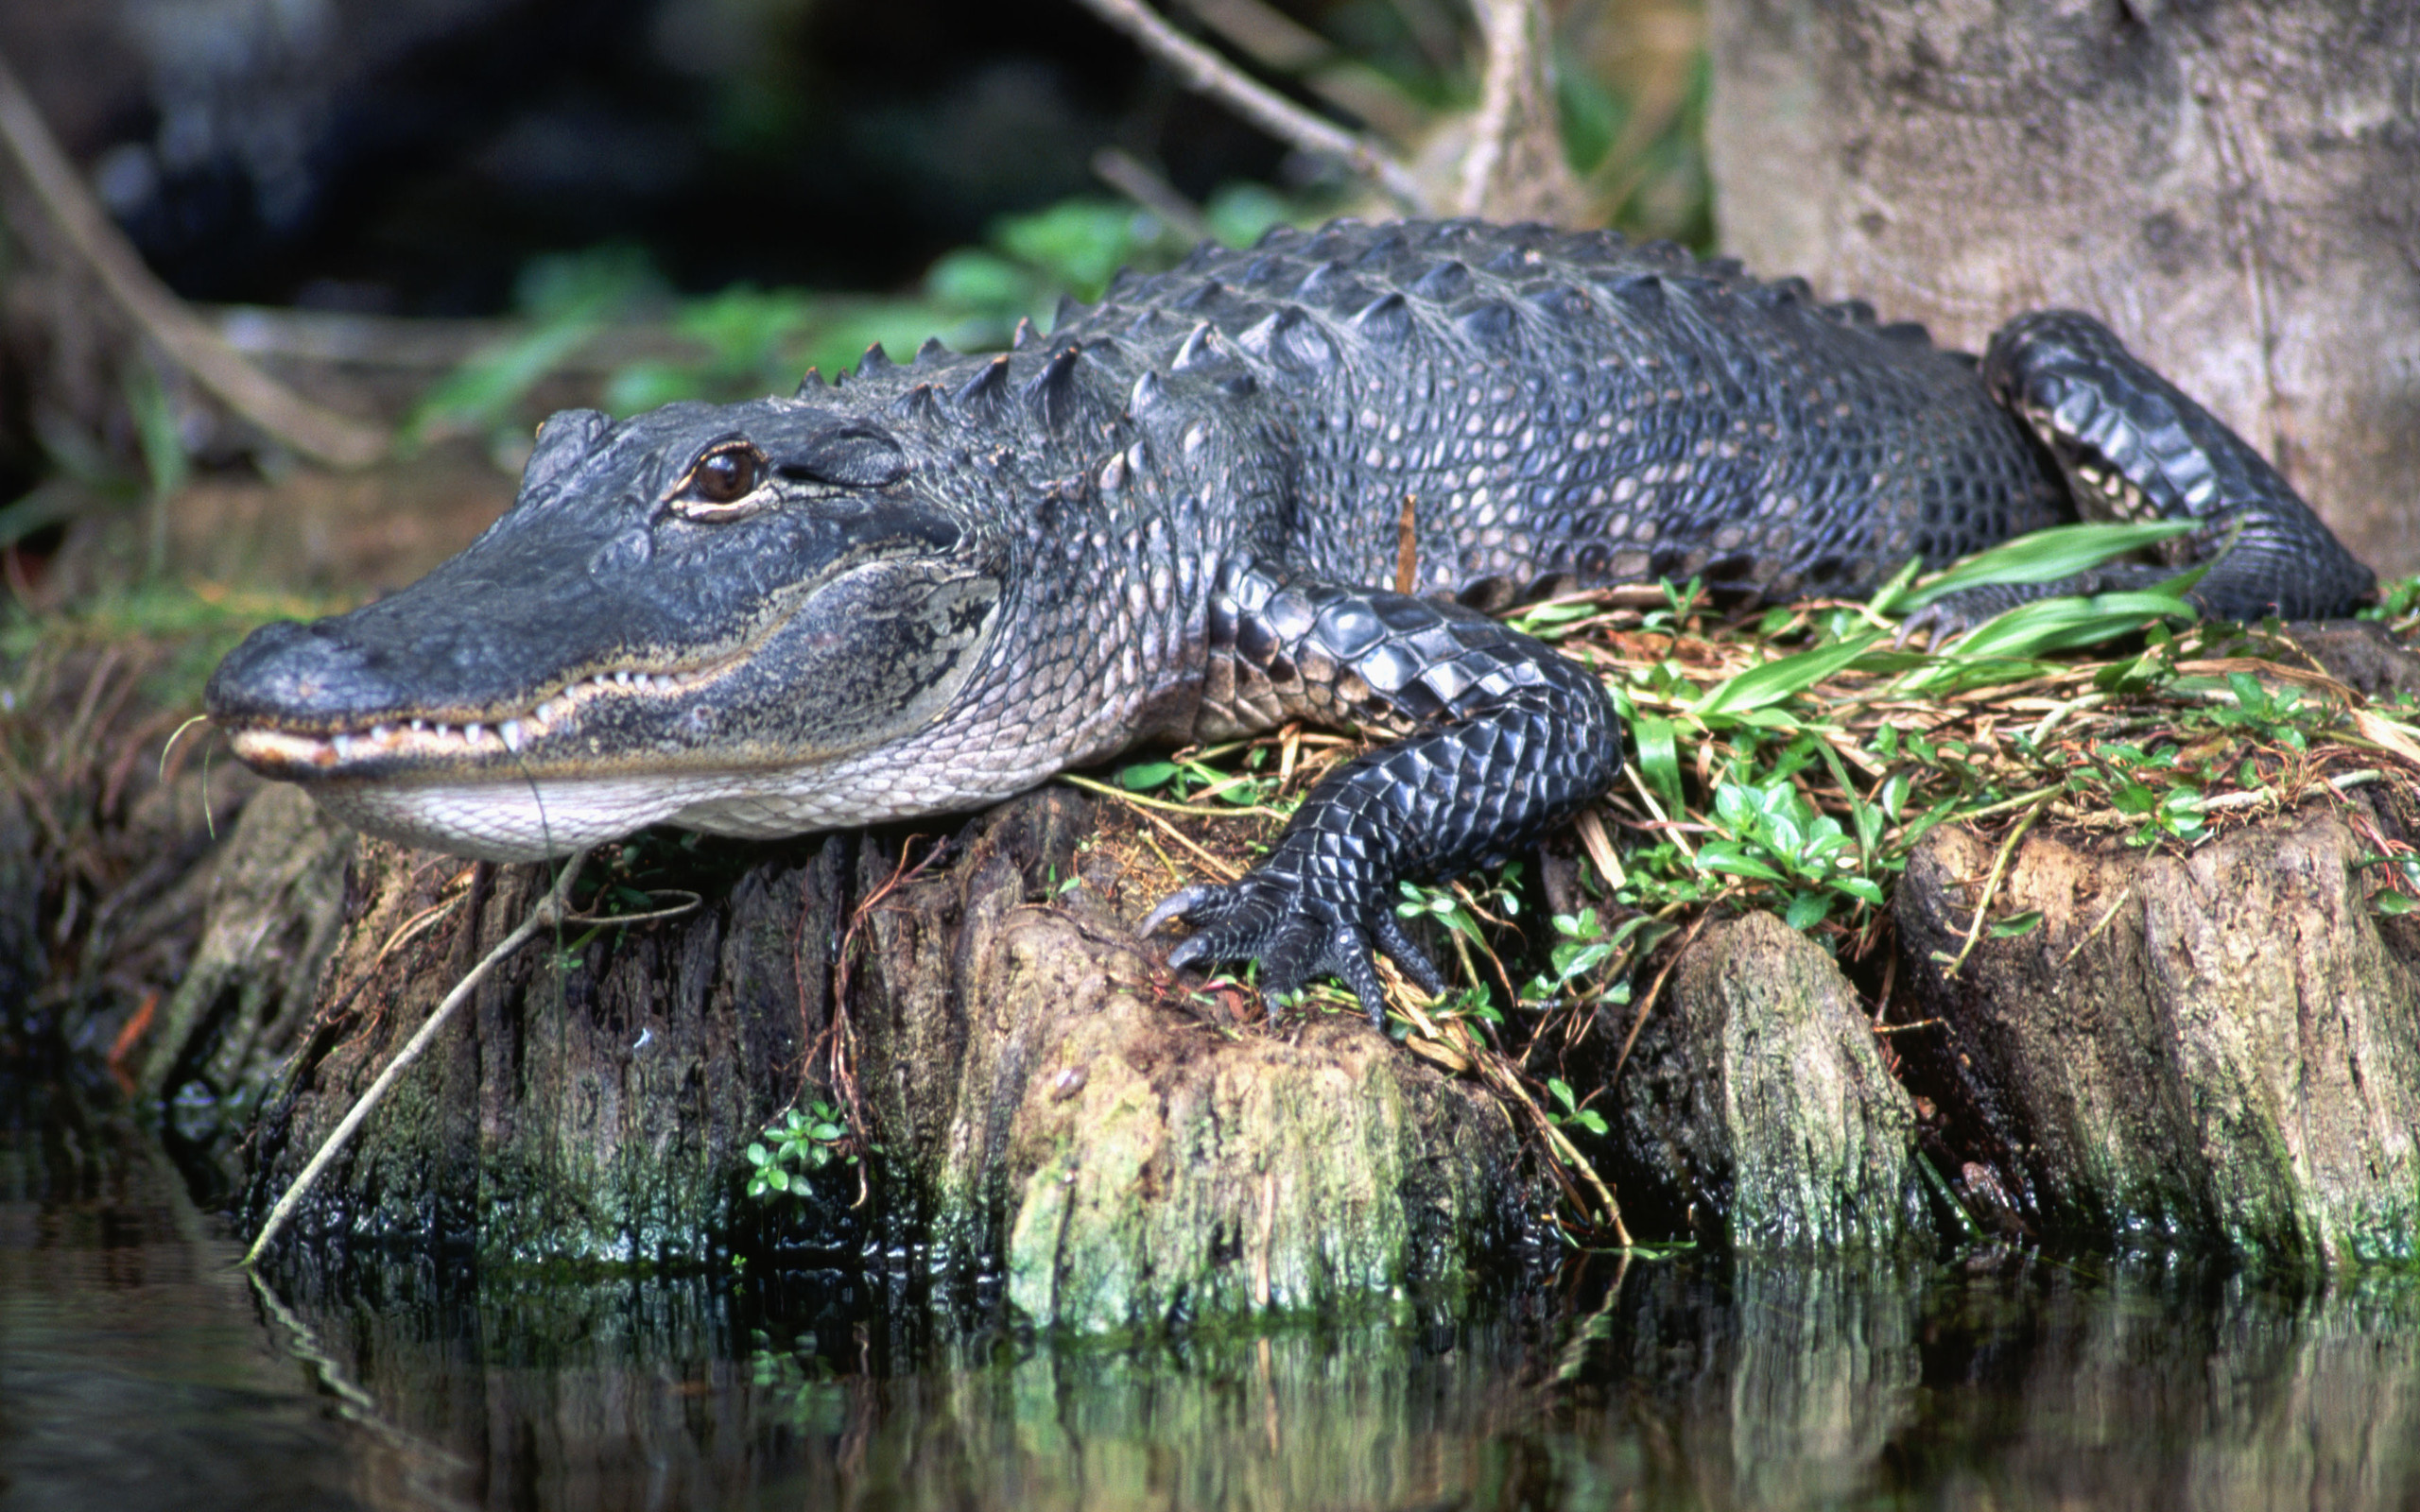 Alligator HD wallpaper, Animal background image, Reptile close-up, Powerful predator, 2560x1600 HD Desktop